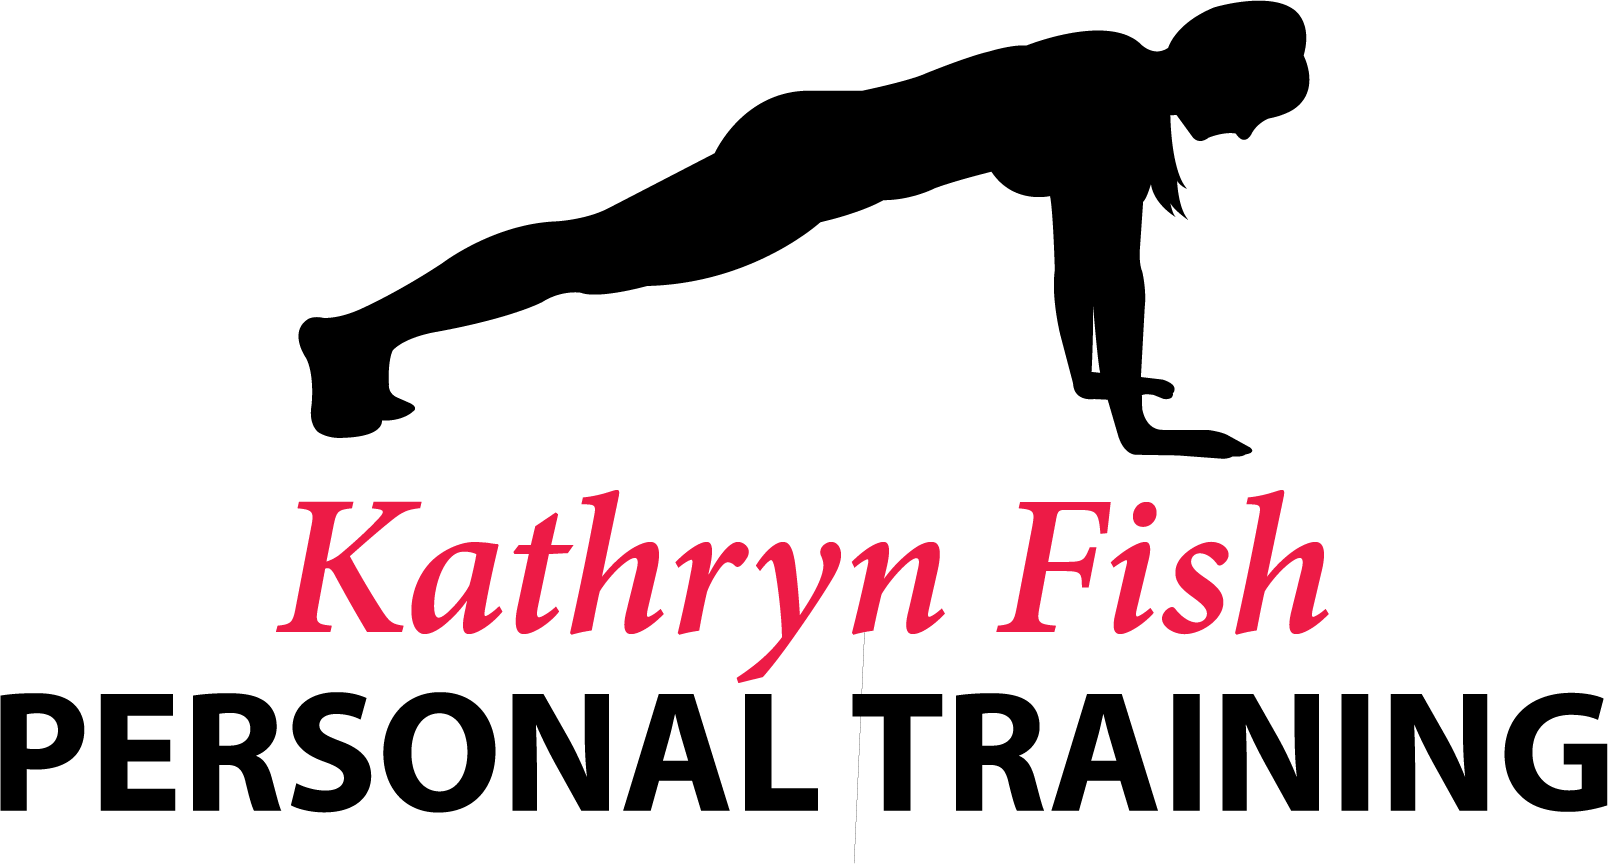 Kathryn Fish Personal Training